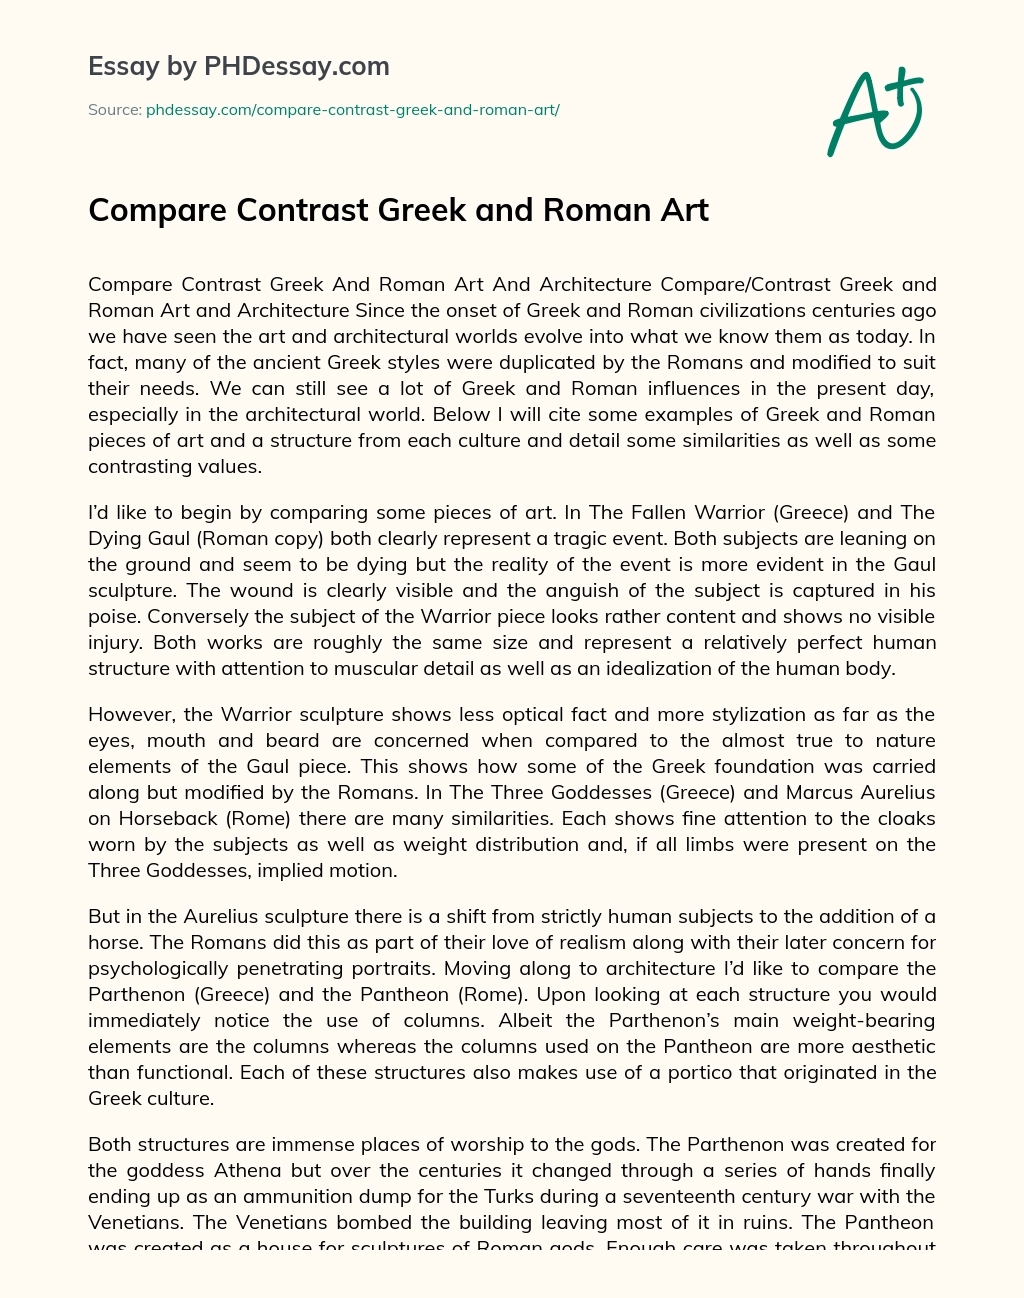 Compare Contrast Greek and Roman Art essay